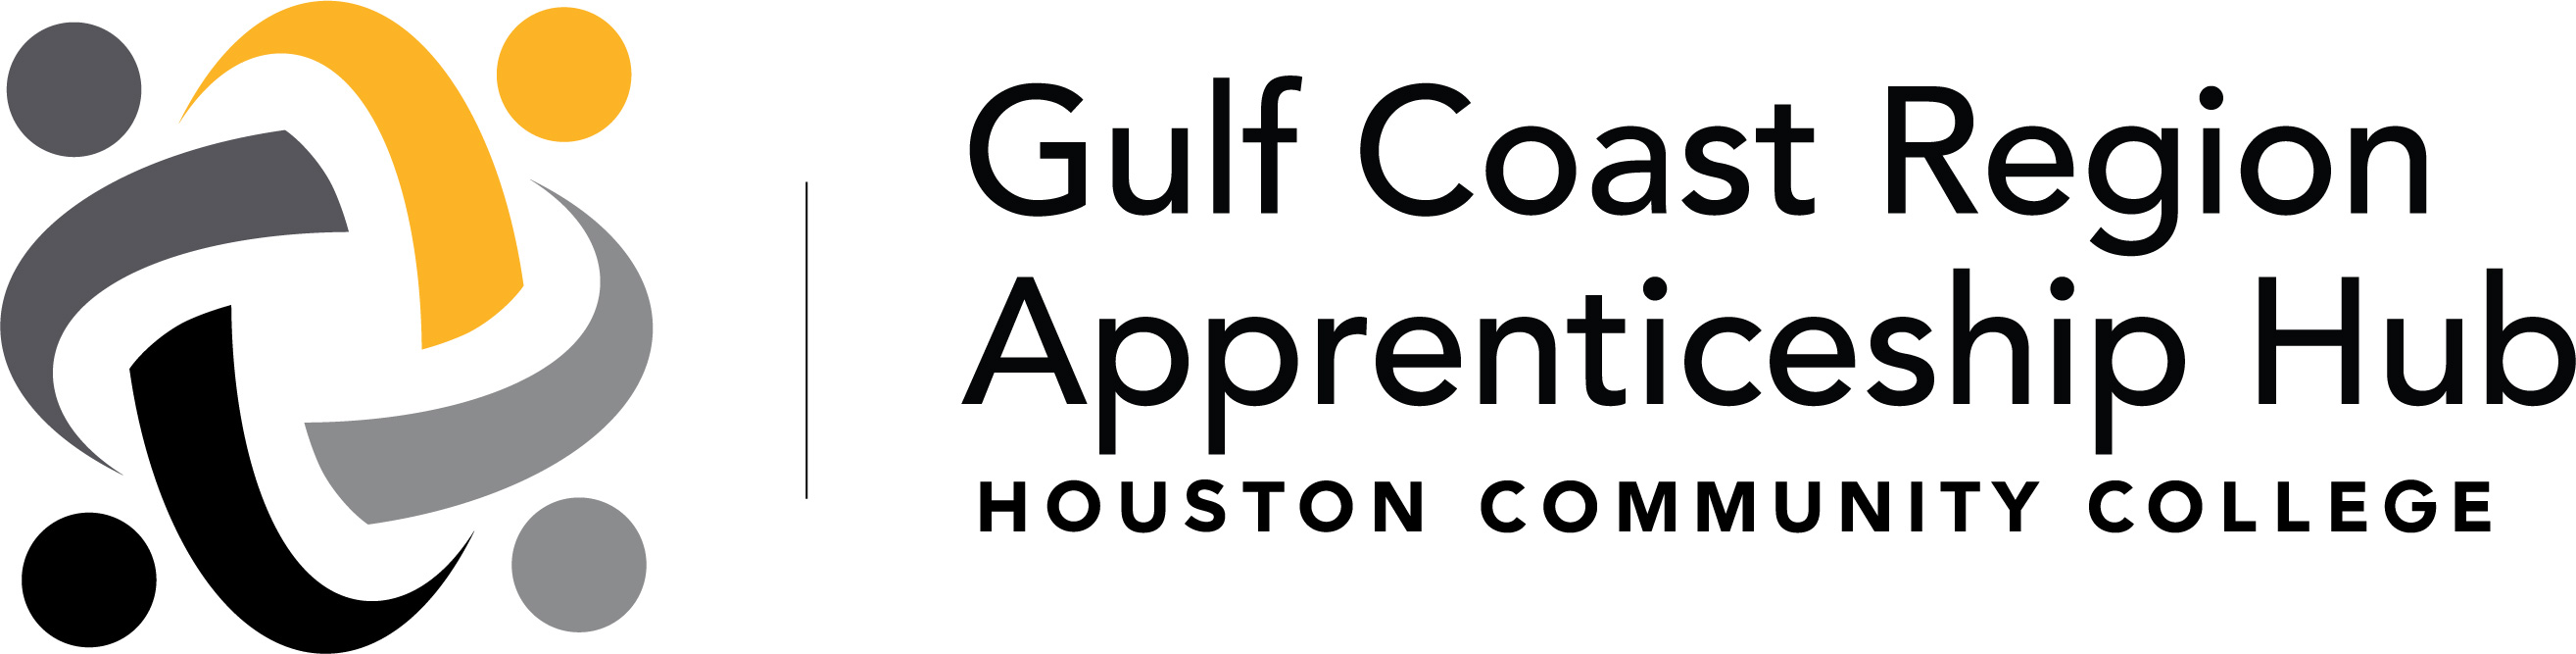 Gulf Coast Region Apprenticeship Hub Banner